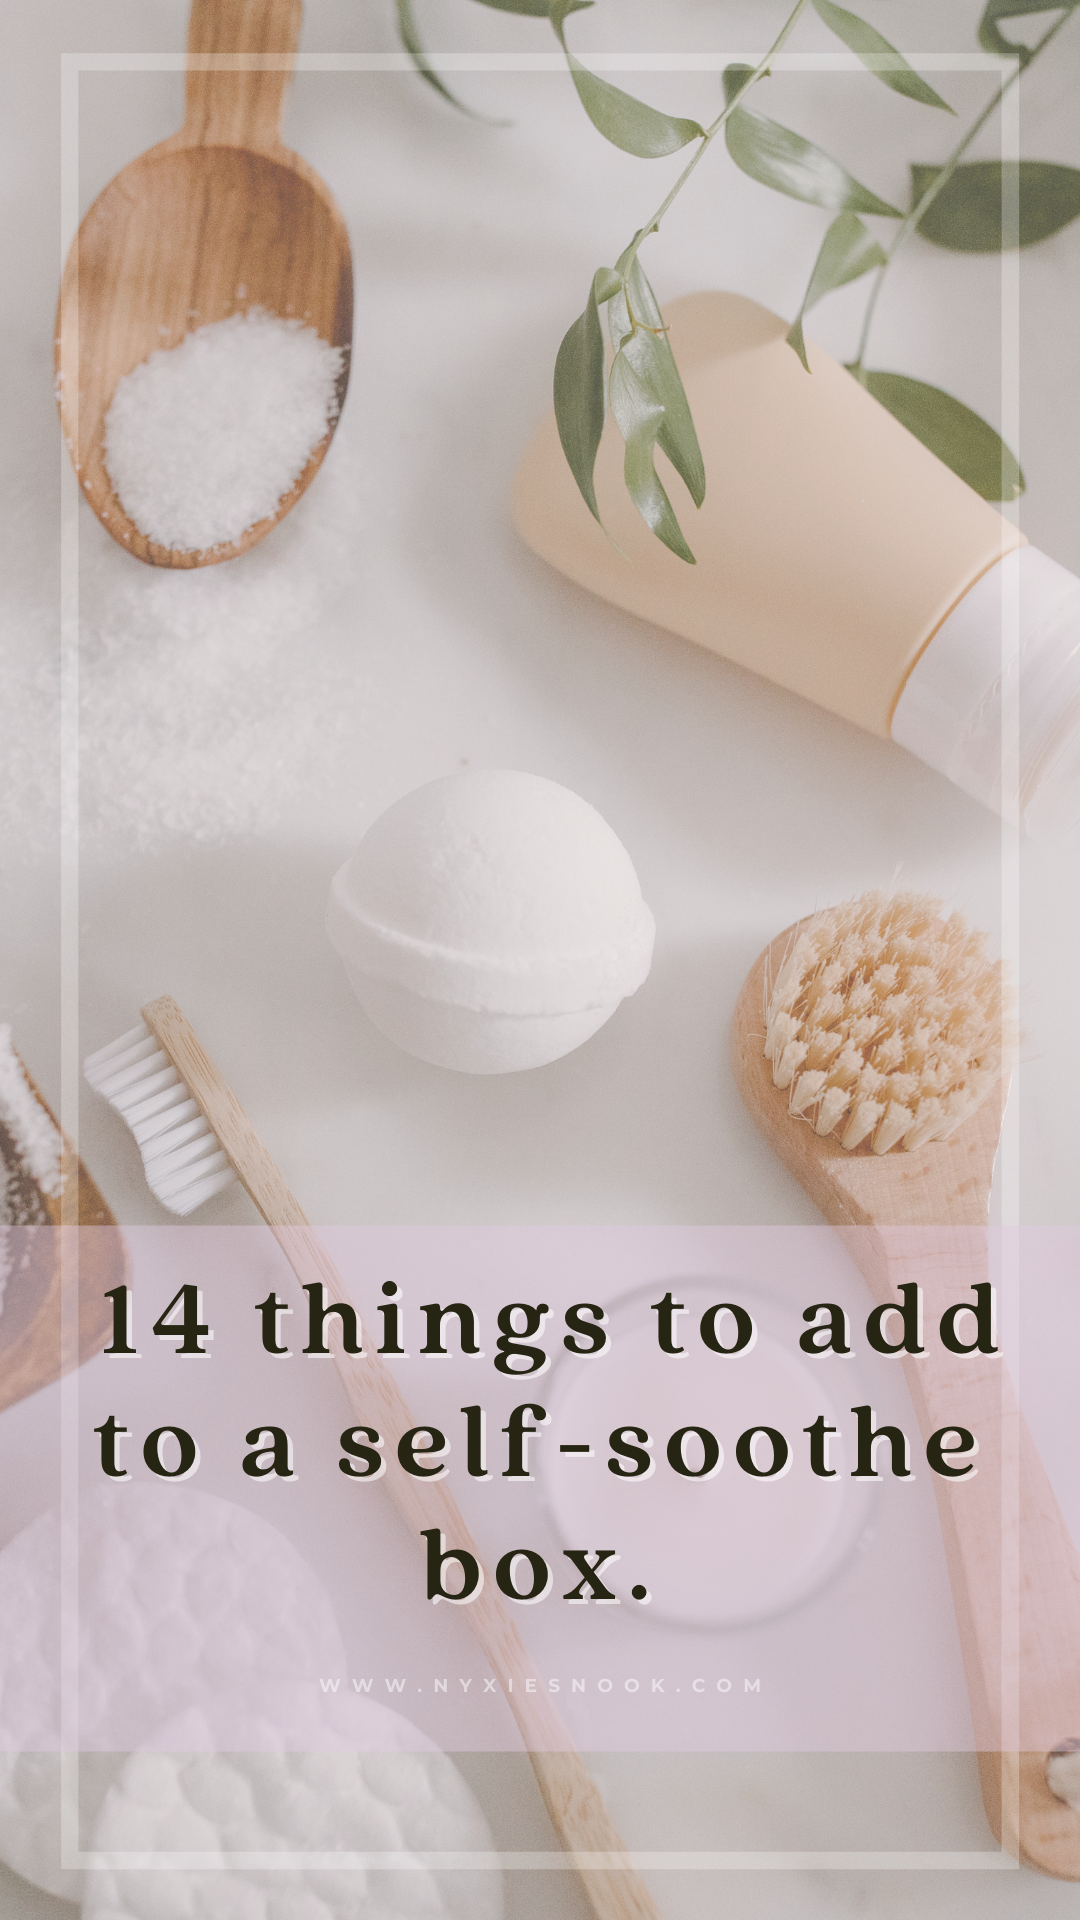 Self-soothe